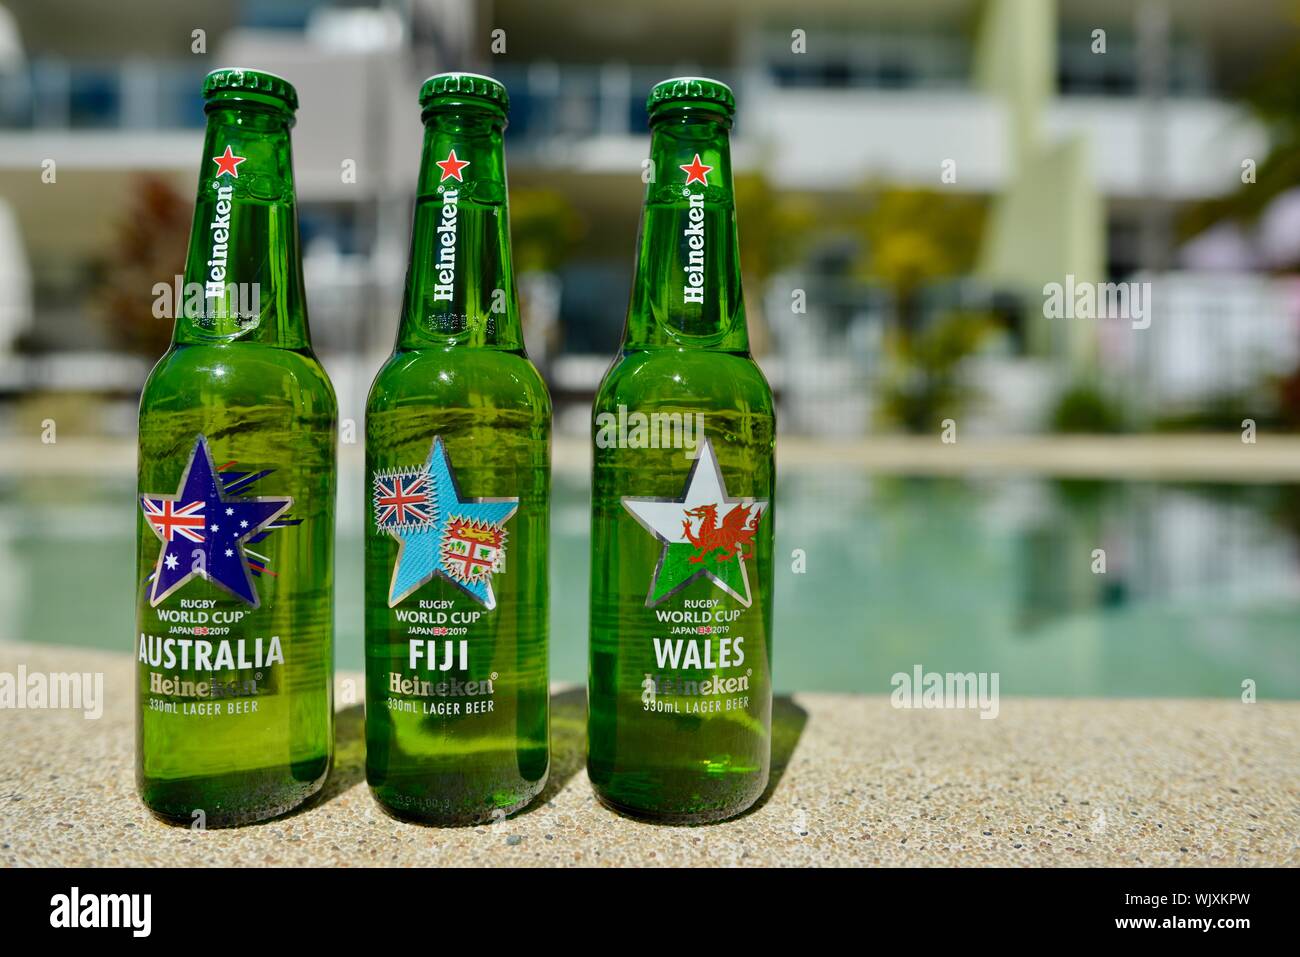 Wales, Australia and Fiji, Pool D, Heineken 2019 Japan Rugby world cup beer bottles Stock Photo